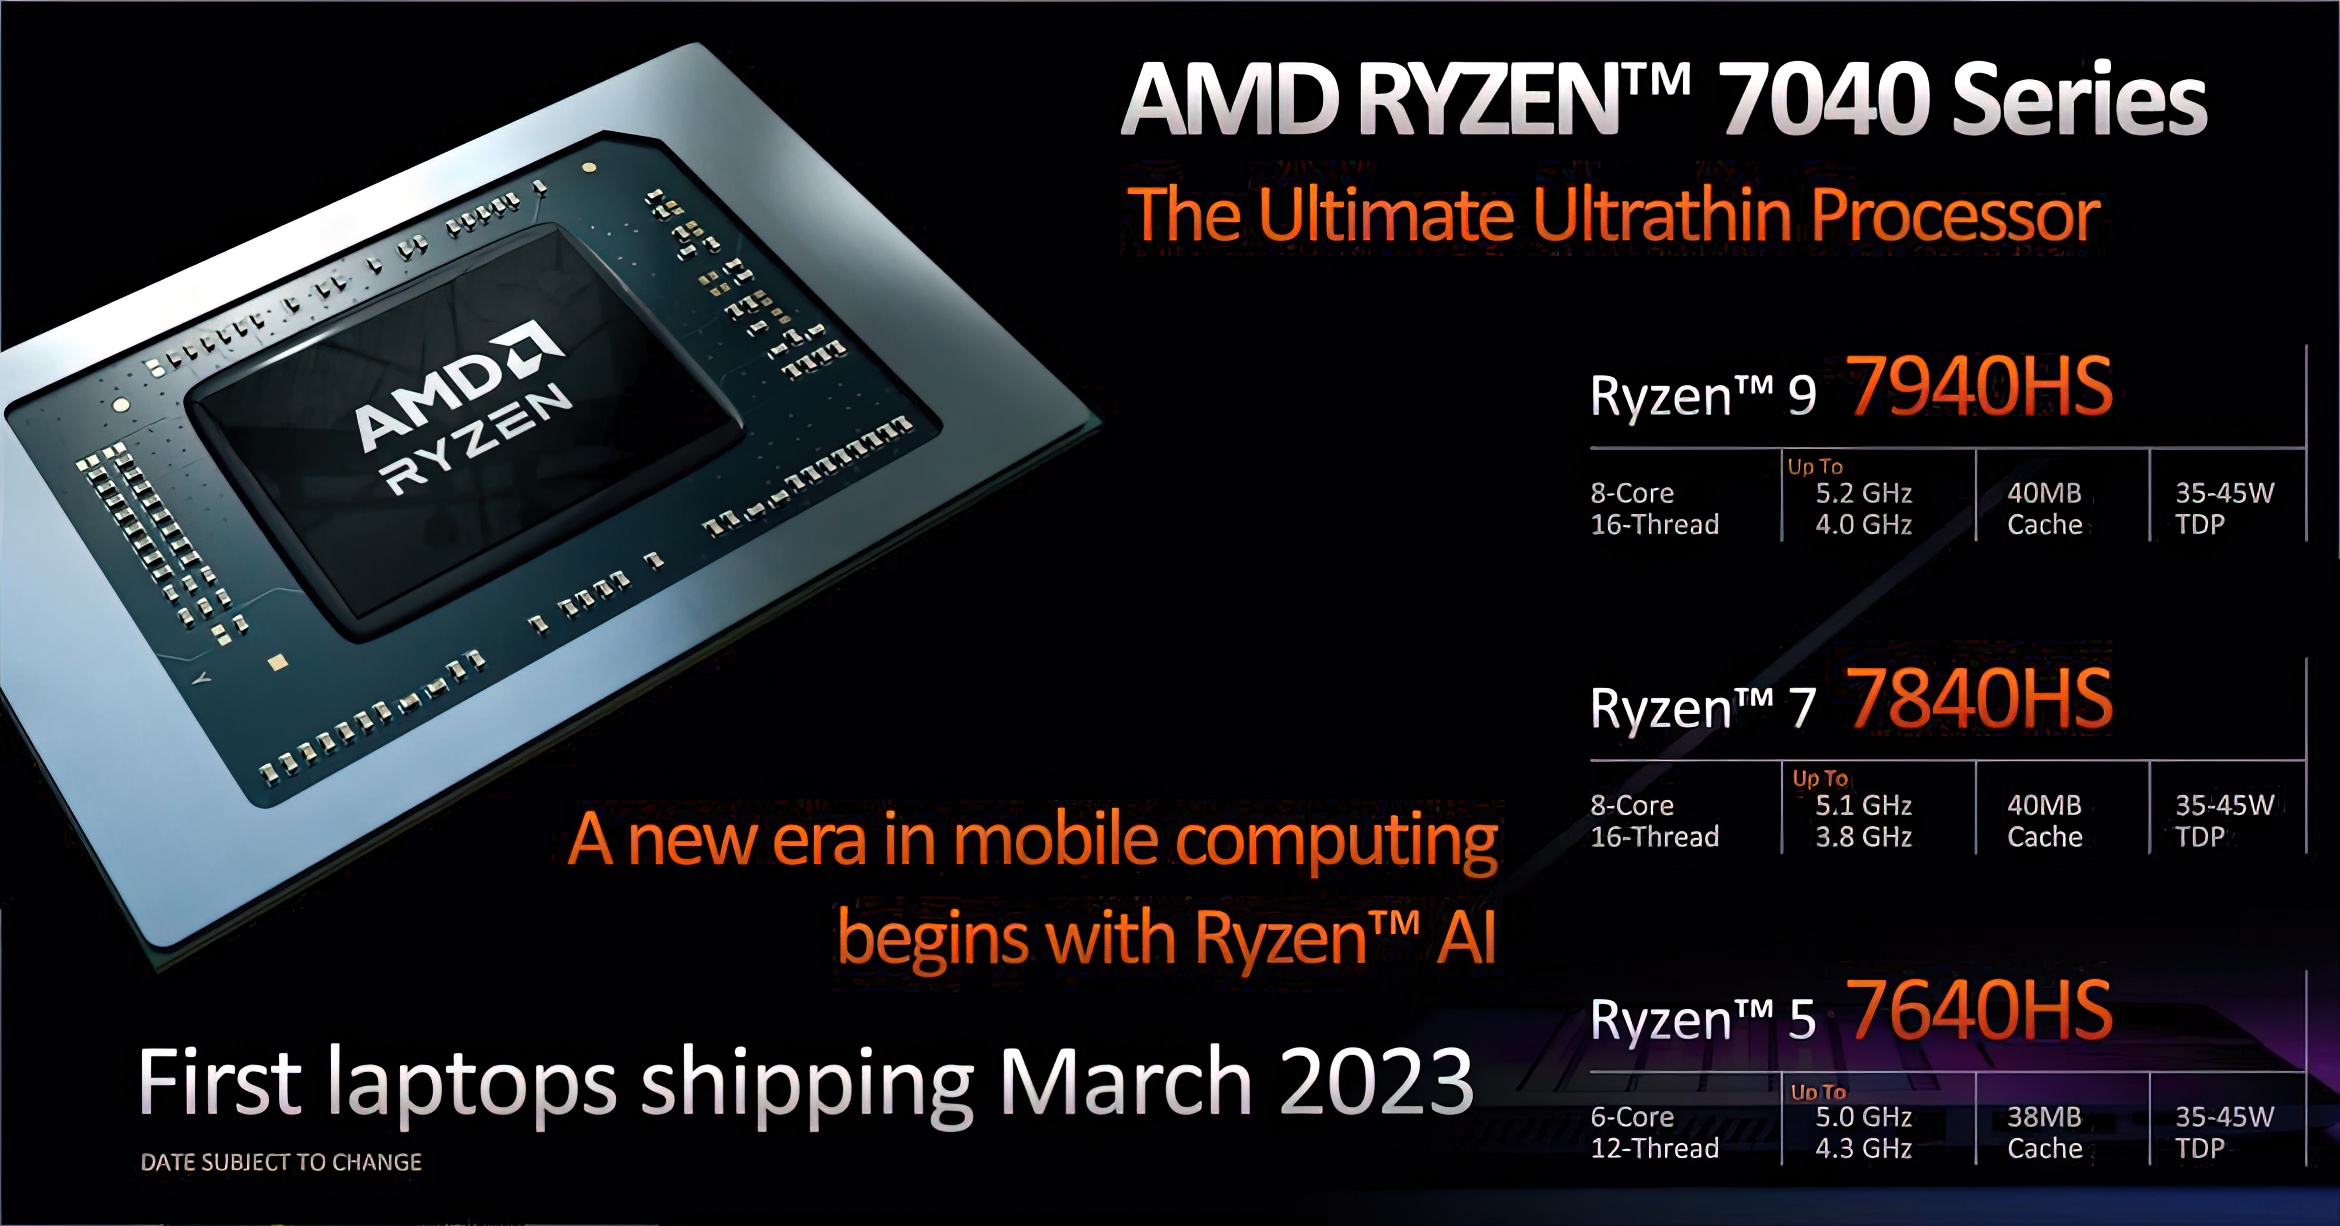 amd ryzen 7000 mobile ces 2023 6 เอเอ็มดีเปิดตัวซีพียู AMD Ryzen 7000 mobile series สถาปัตย์ Zen4 ขนาด 5nm ใหม่ล่าสุดถึง 5รุ่น รุ่นท็อป Ryzen 9 7945HX 16C/32T ความเร็ว 5.4Ghz 